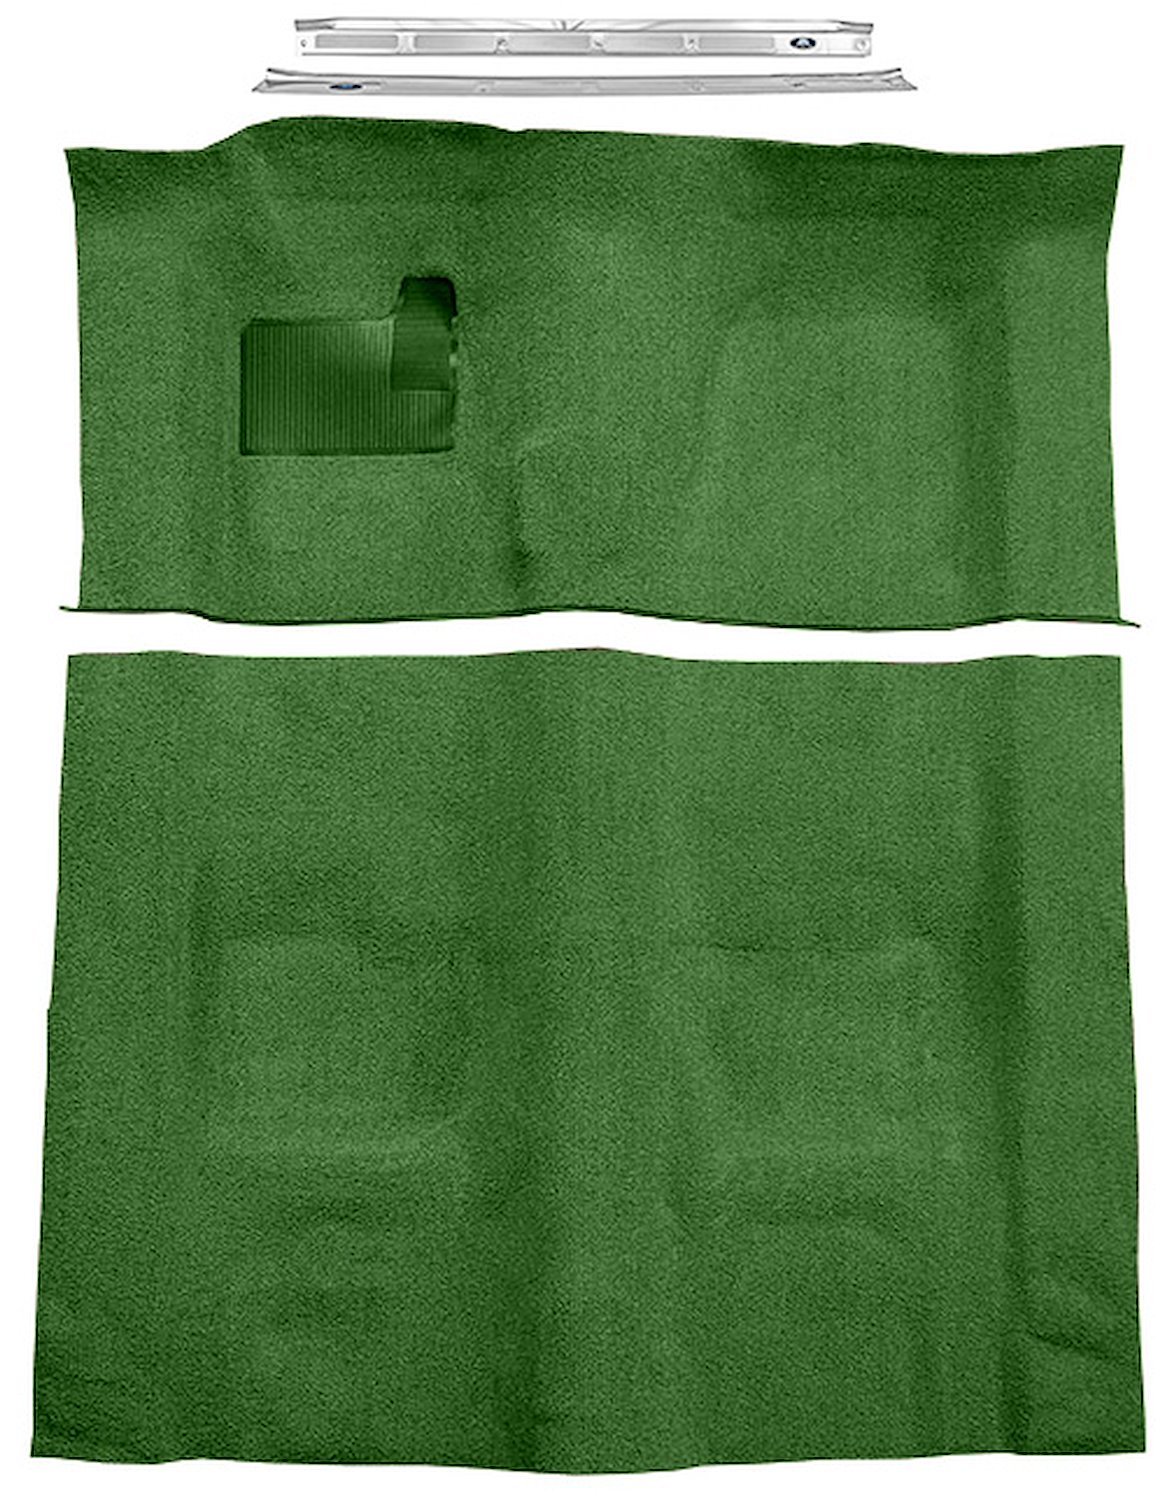 Green Molded Cut Pile Carpet Kit w/Door Sill Plates for 1970-1973 Chevy Camaro, Pontiac Firebird [4-Speed Transmission]